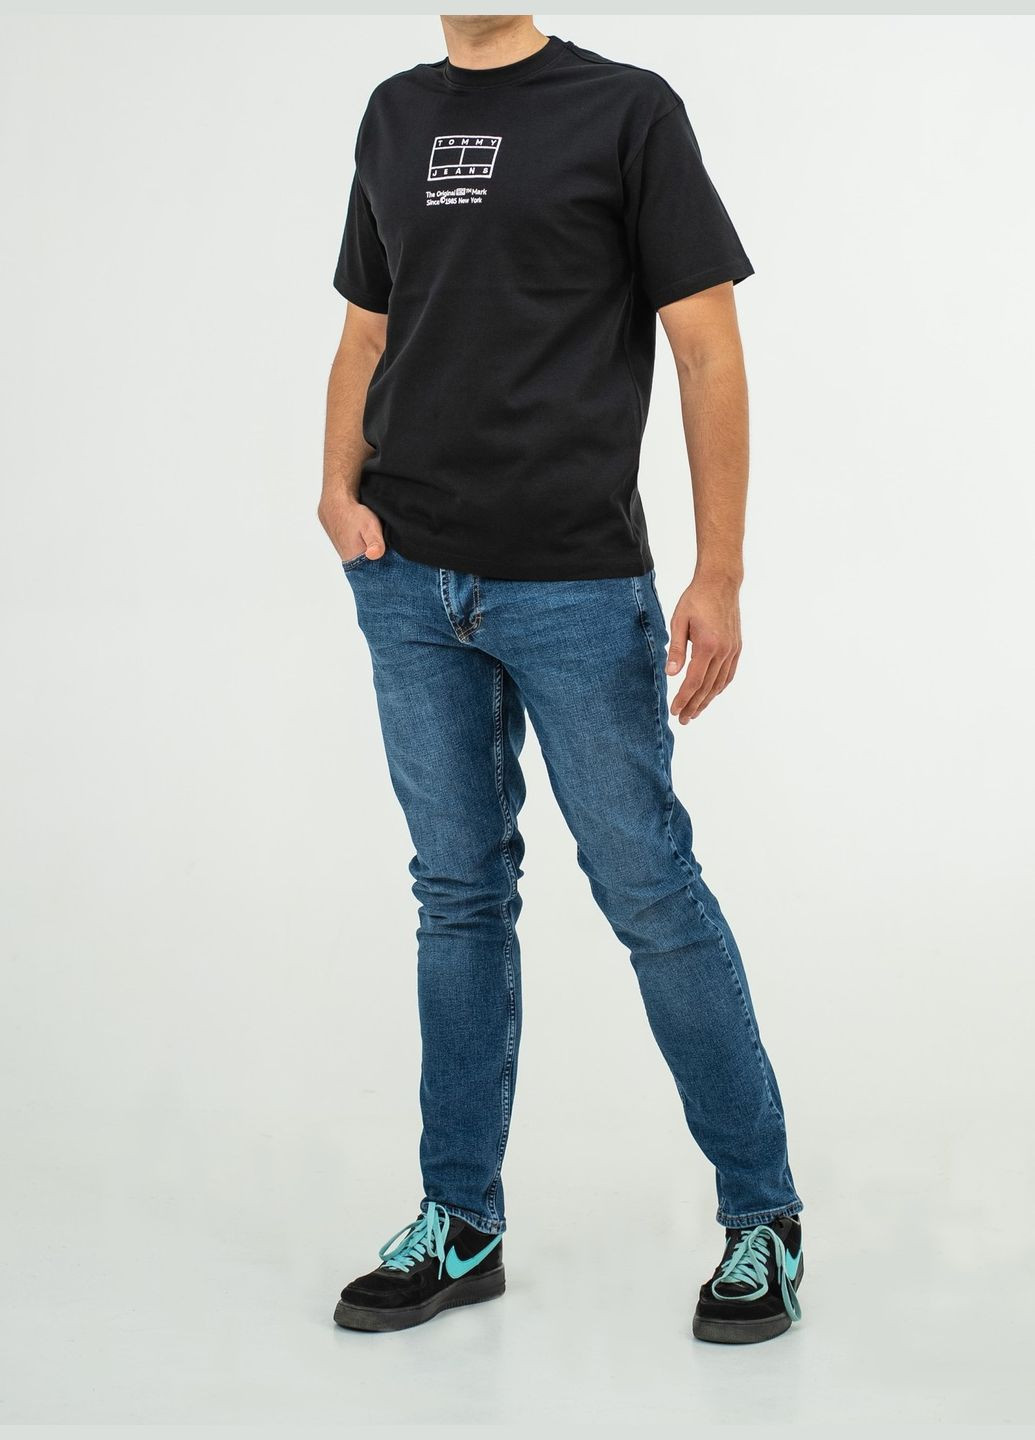 Чорна футболка чоловіча Tommy Hilfiger New York